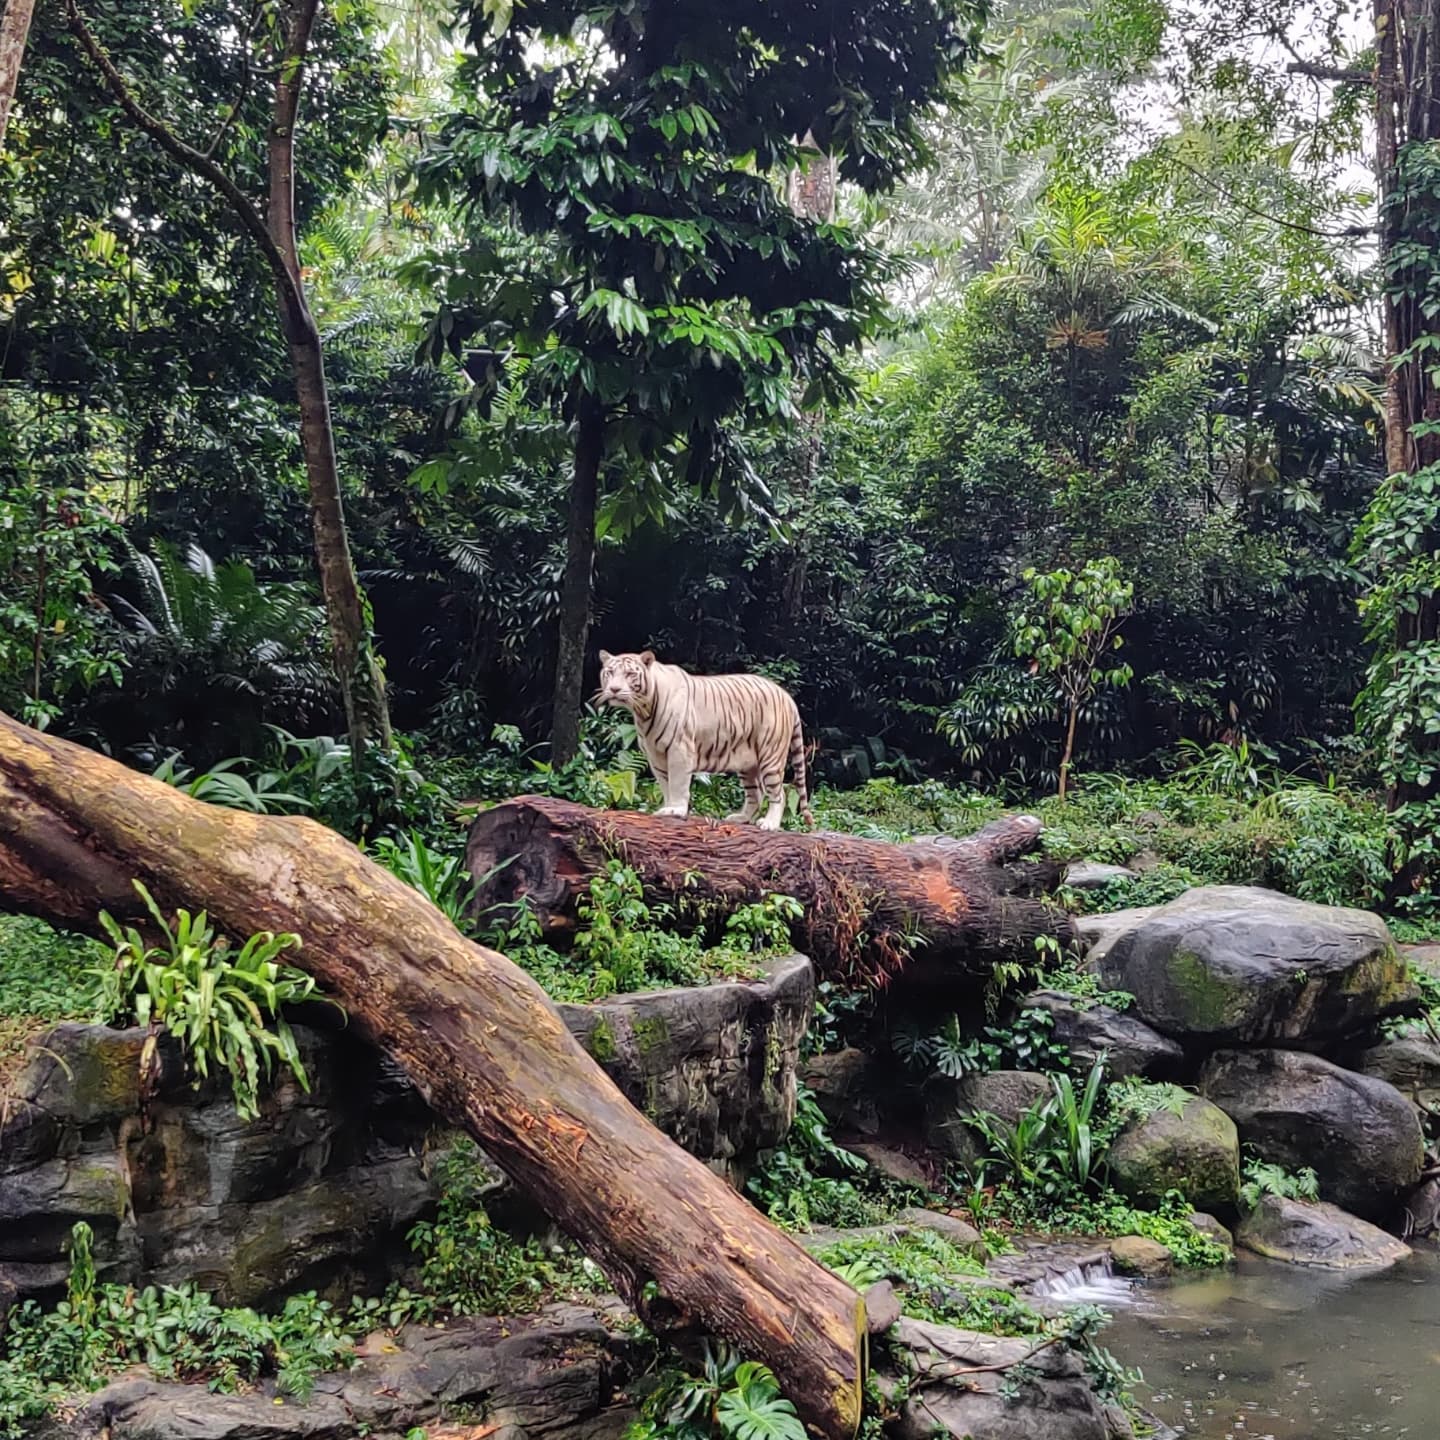 Singapore Zoo Guide - White Tiger